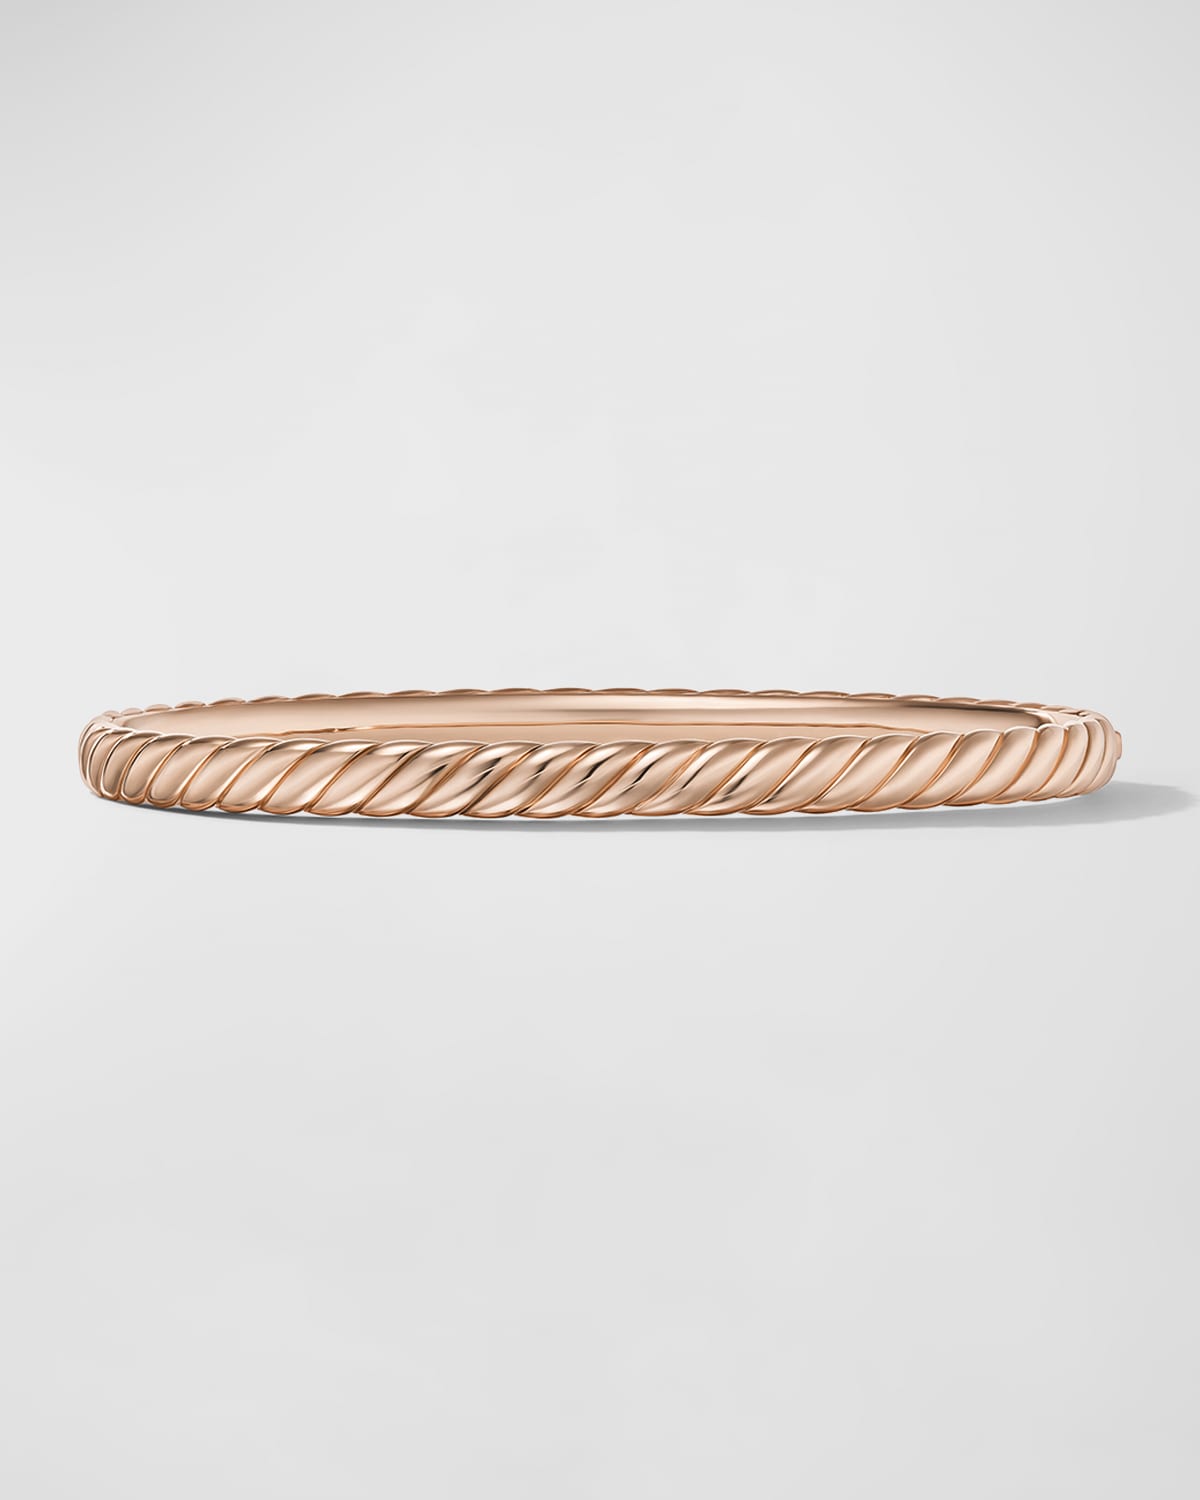 David Yurman Sculpted Cable Bracelet in 18K Rose Gold, 4.5mm, Size M